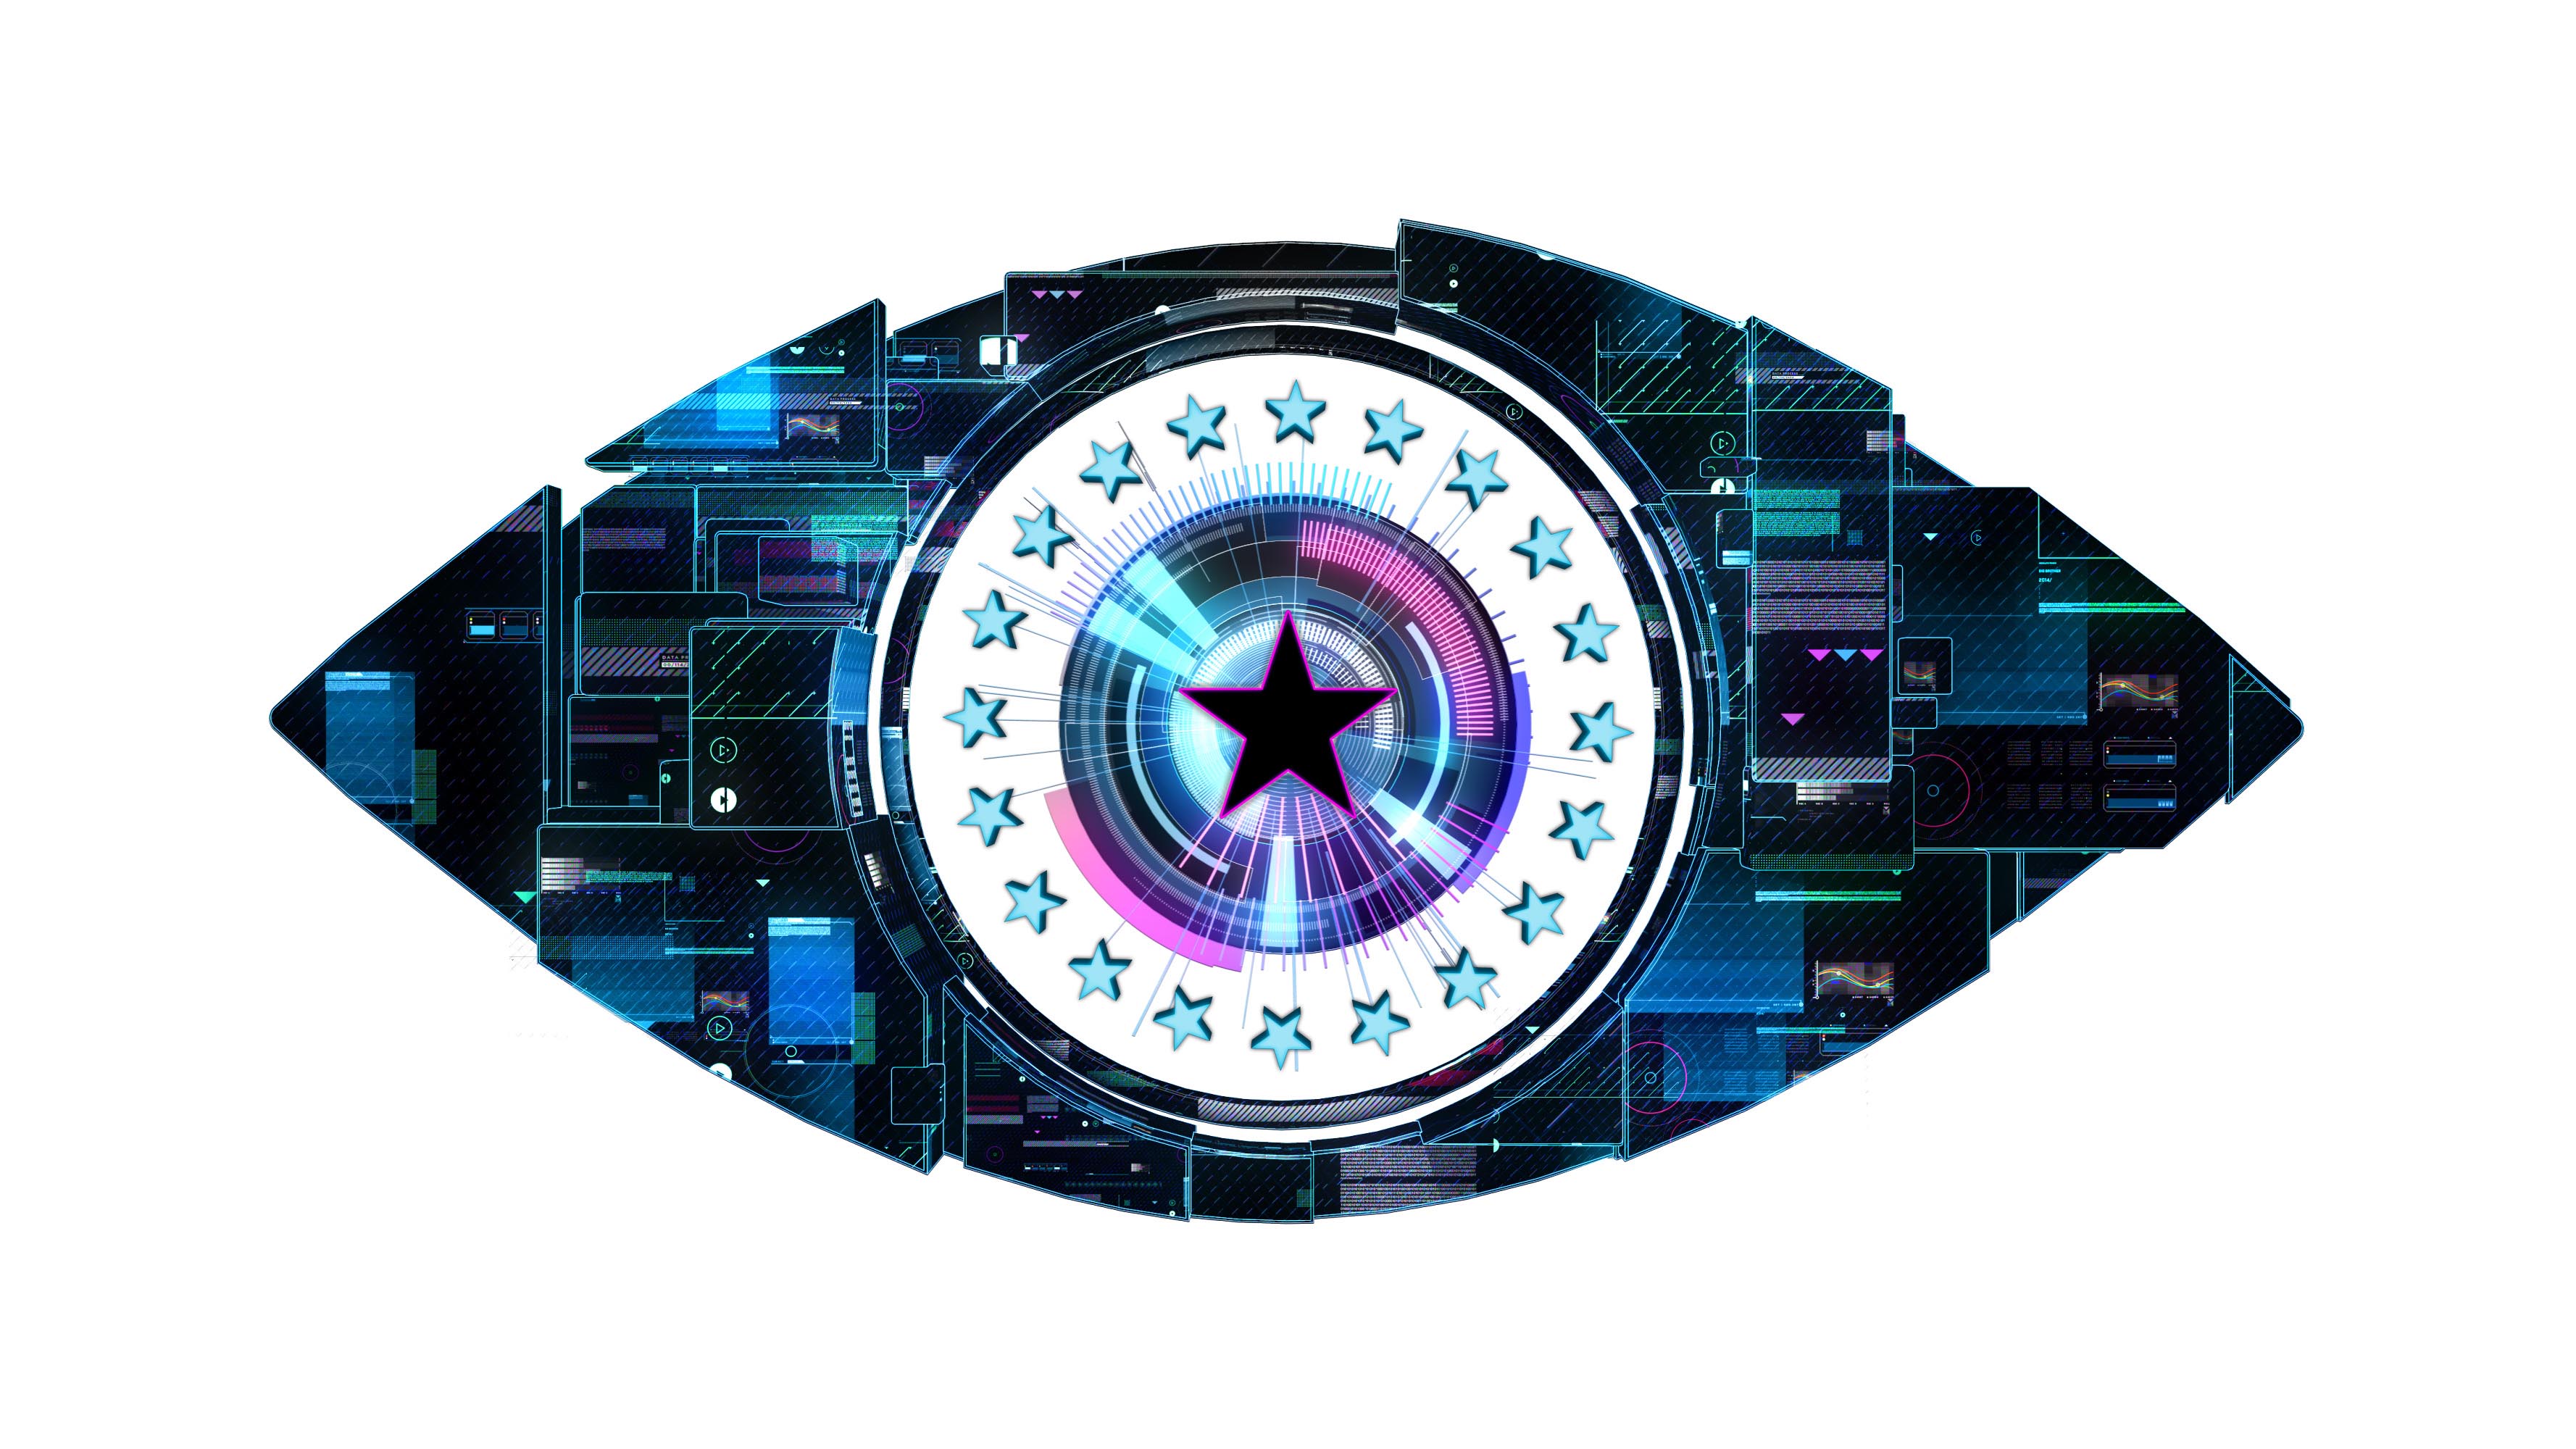 Stevi Richie talks CBB: “I’ve always loved Big Brother”